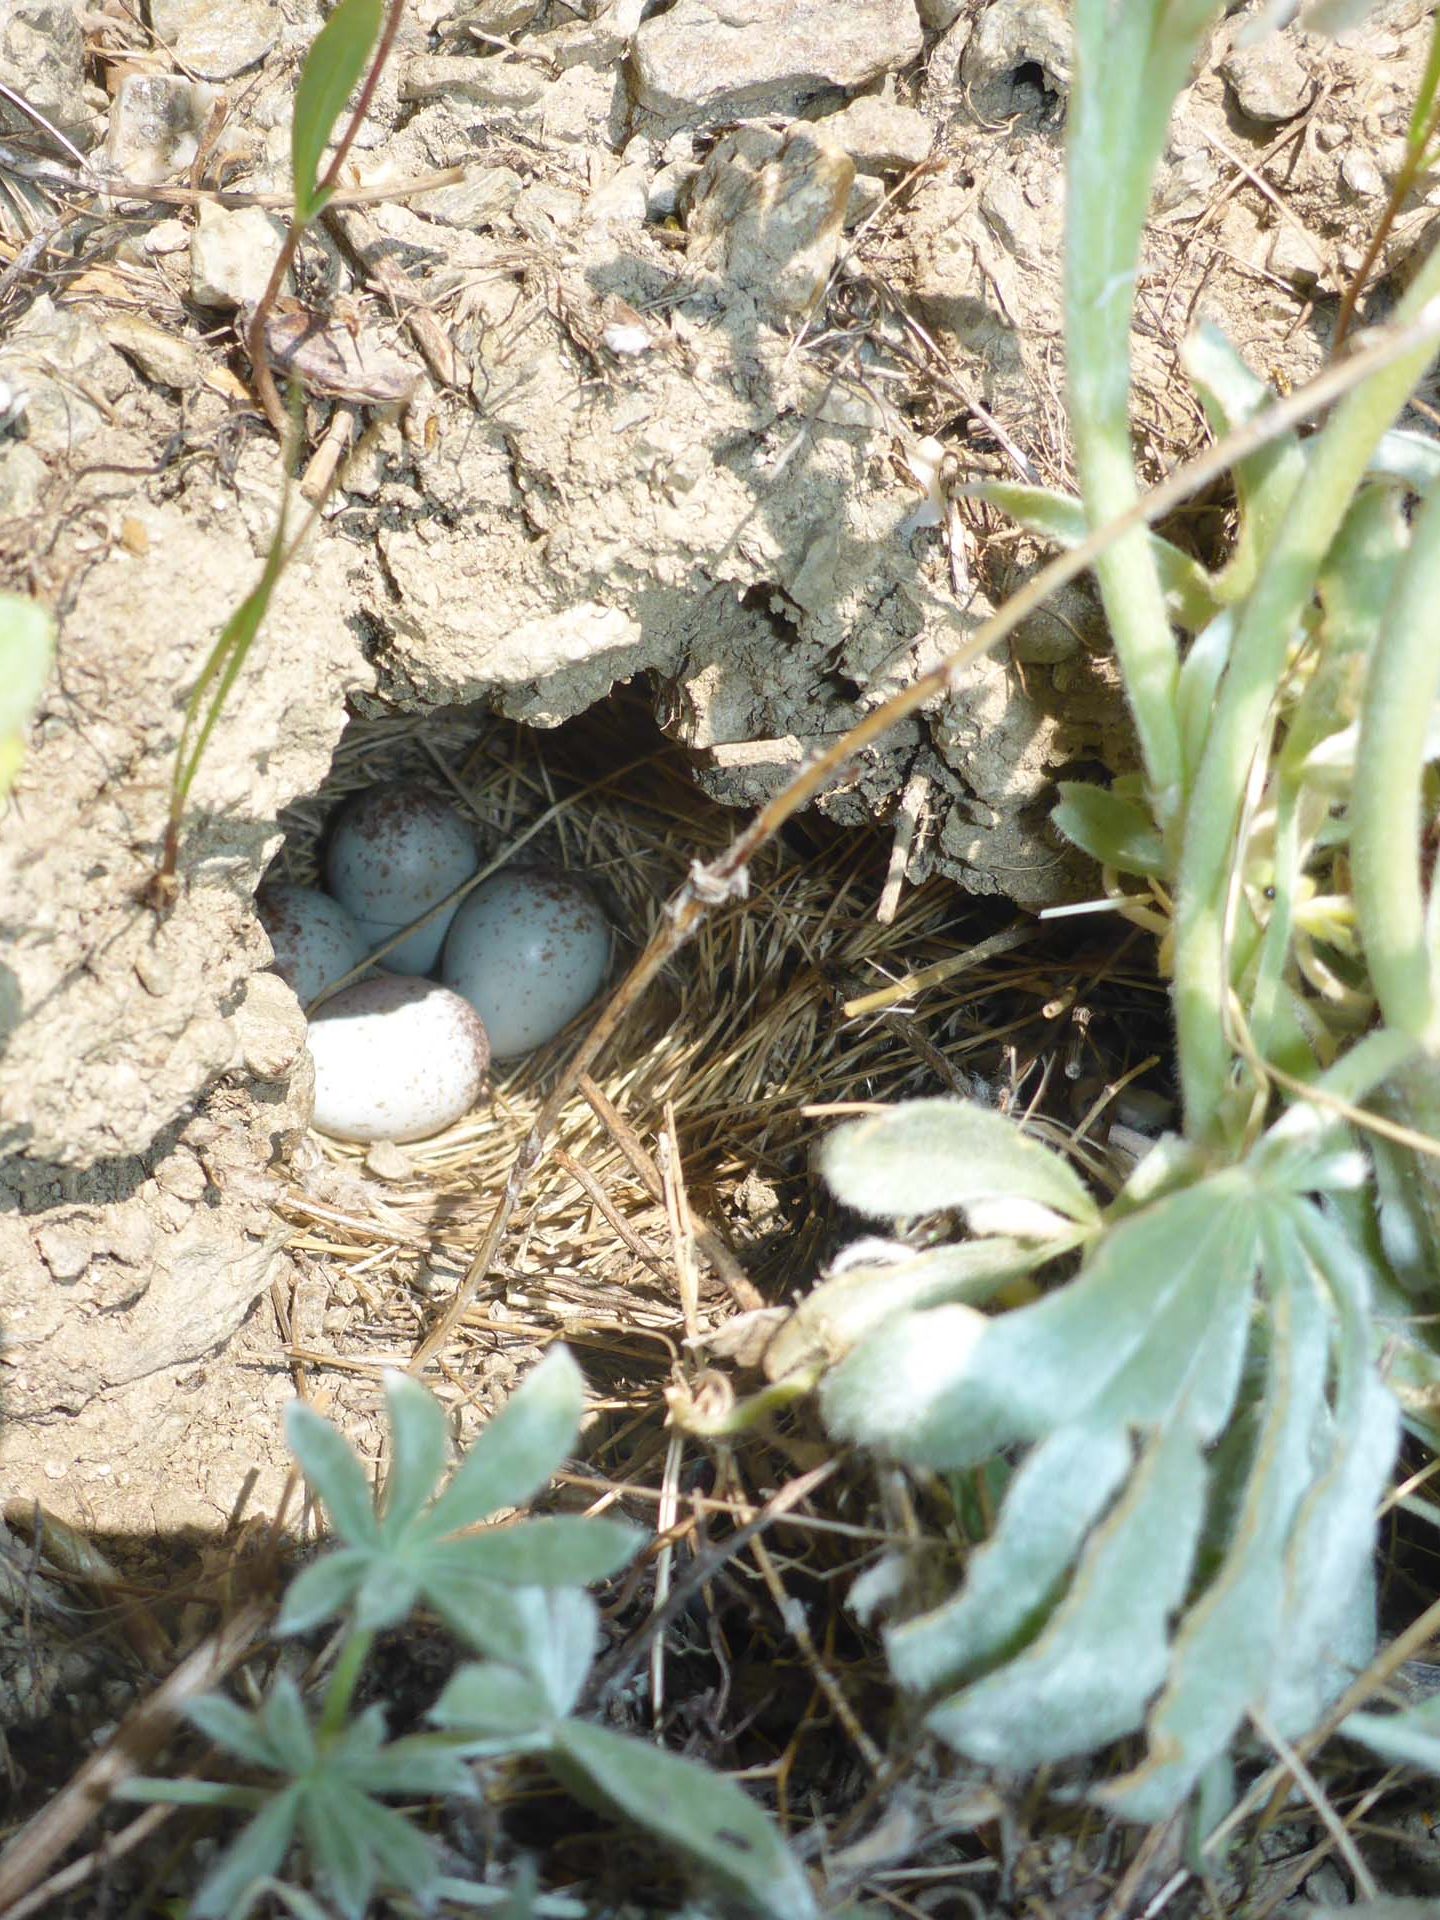 Bird eggs in burrow. D. Burk.